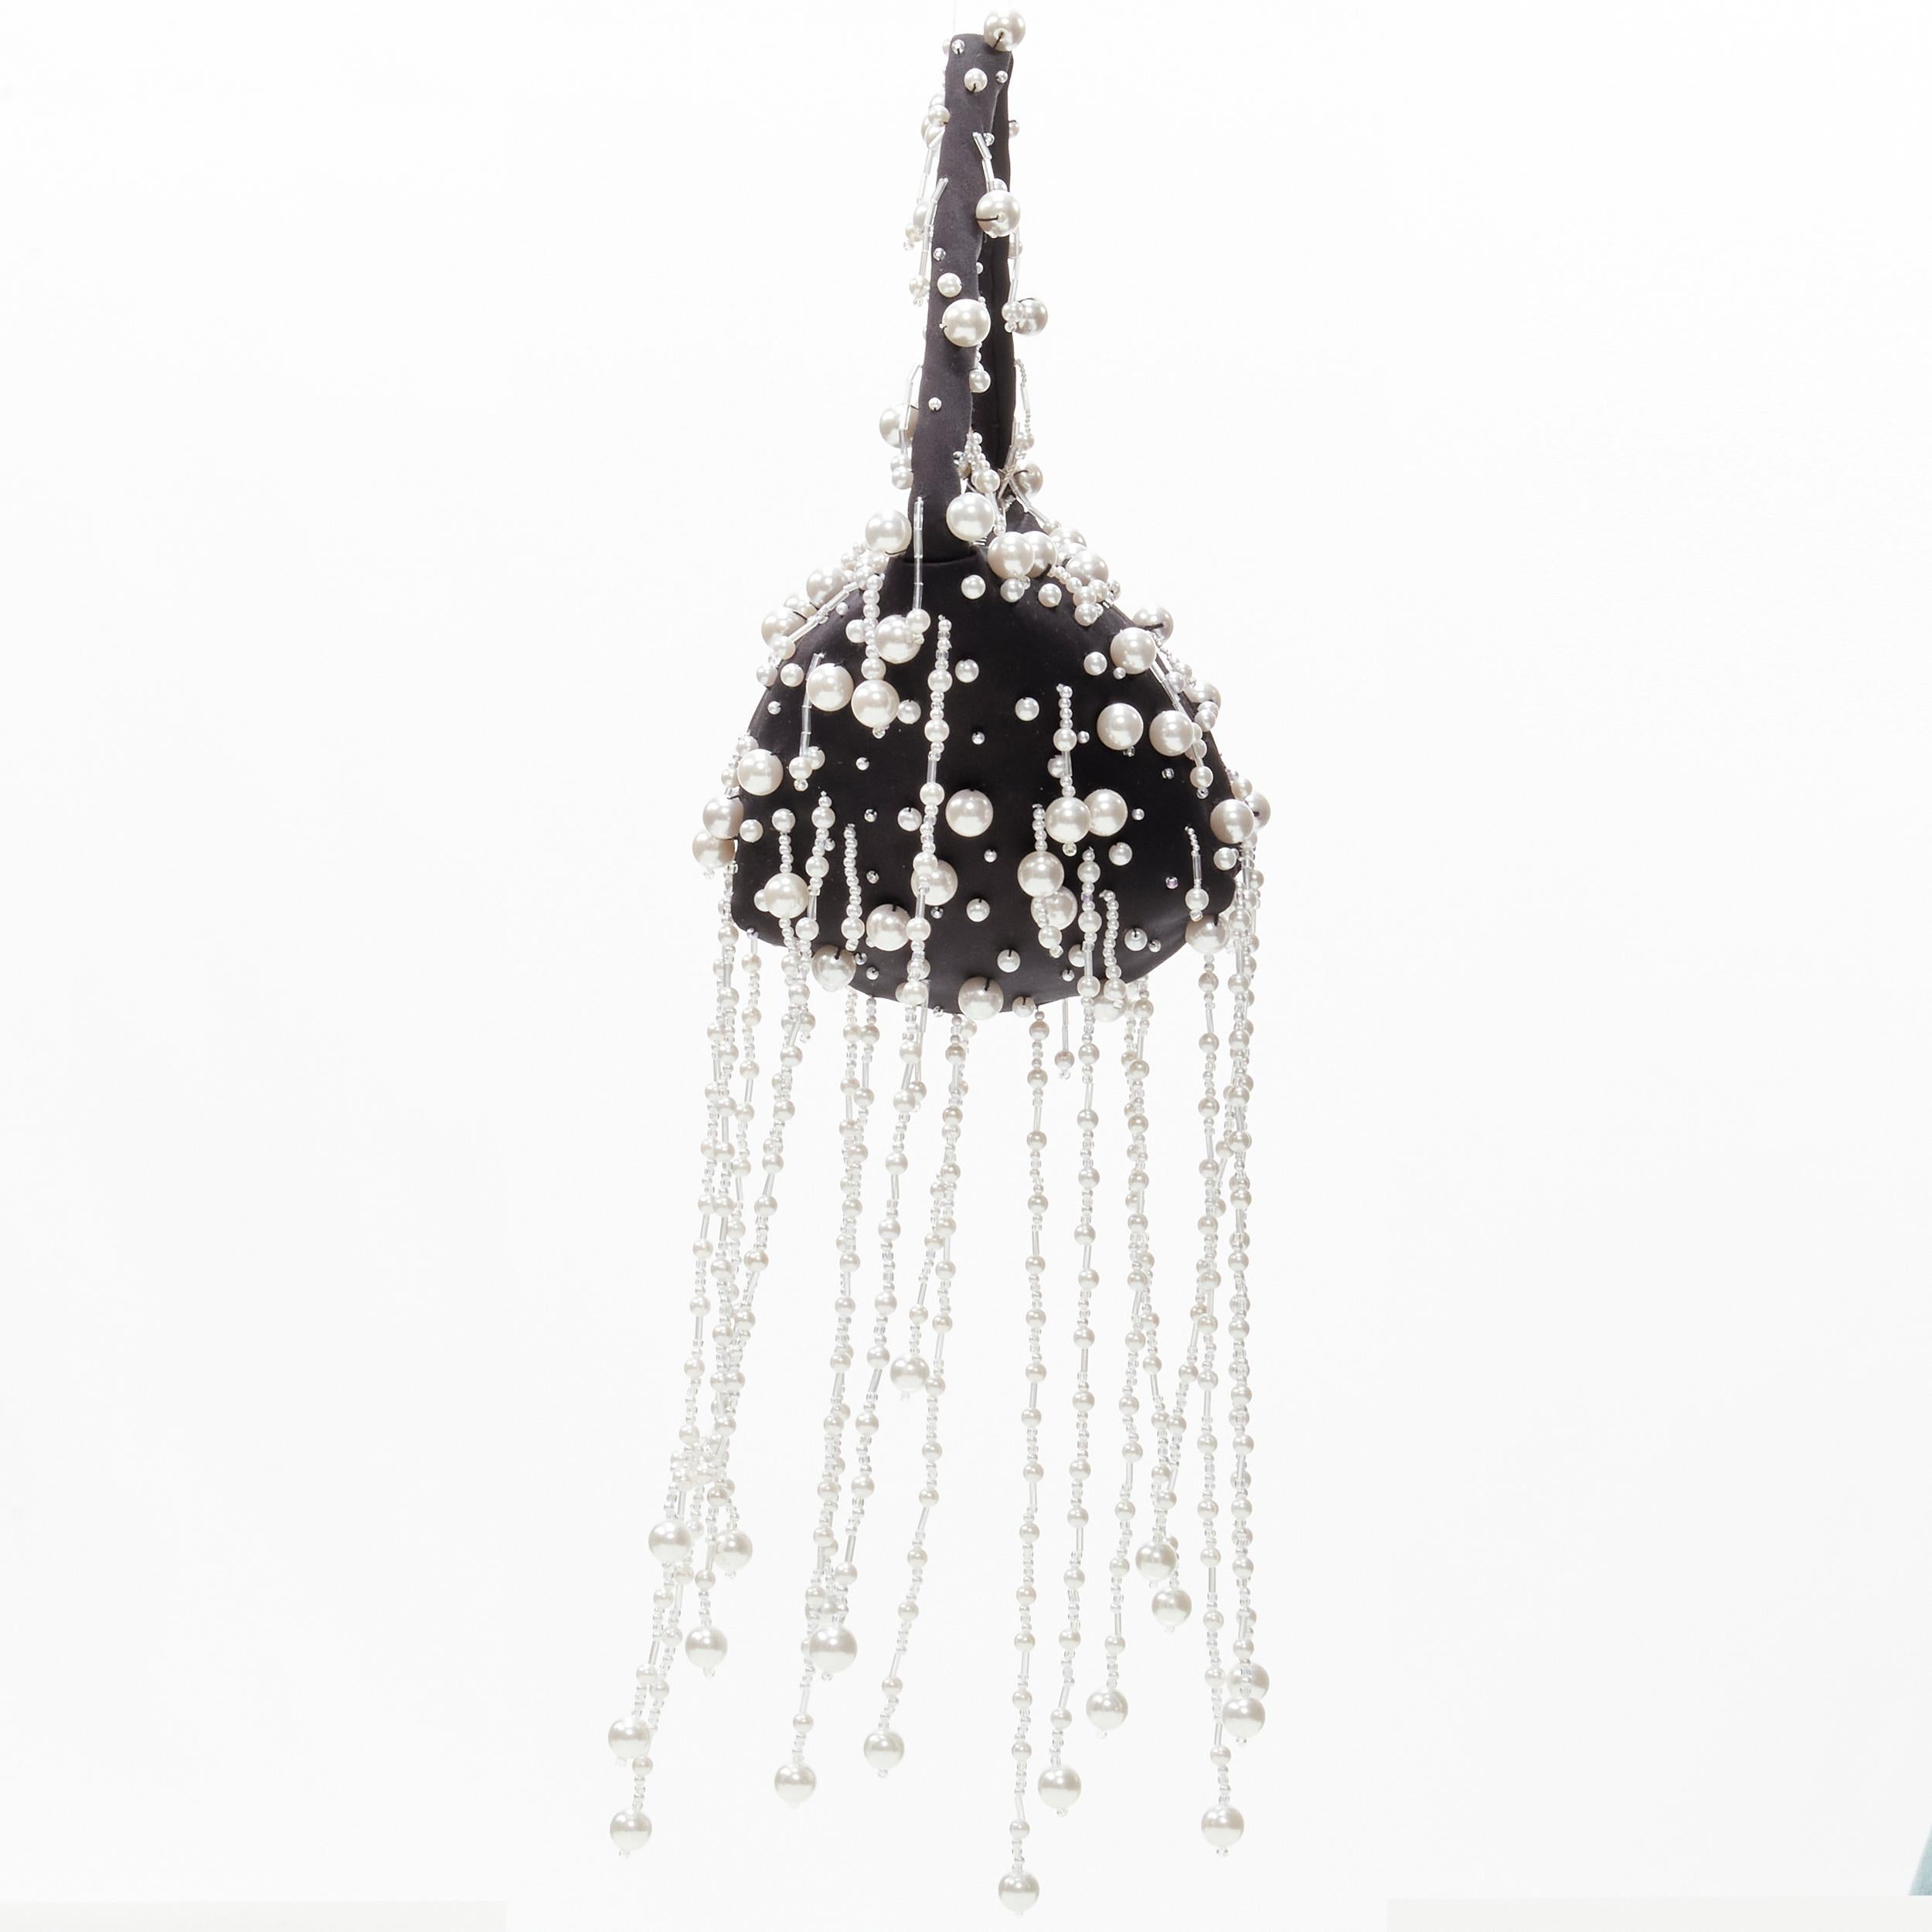 Women's new CHRISTOPHER KANE Runway pearl embellished black satin evening bag